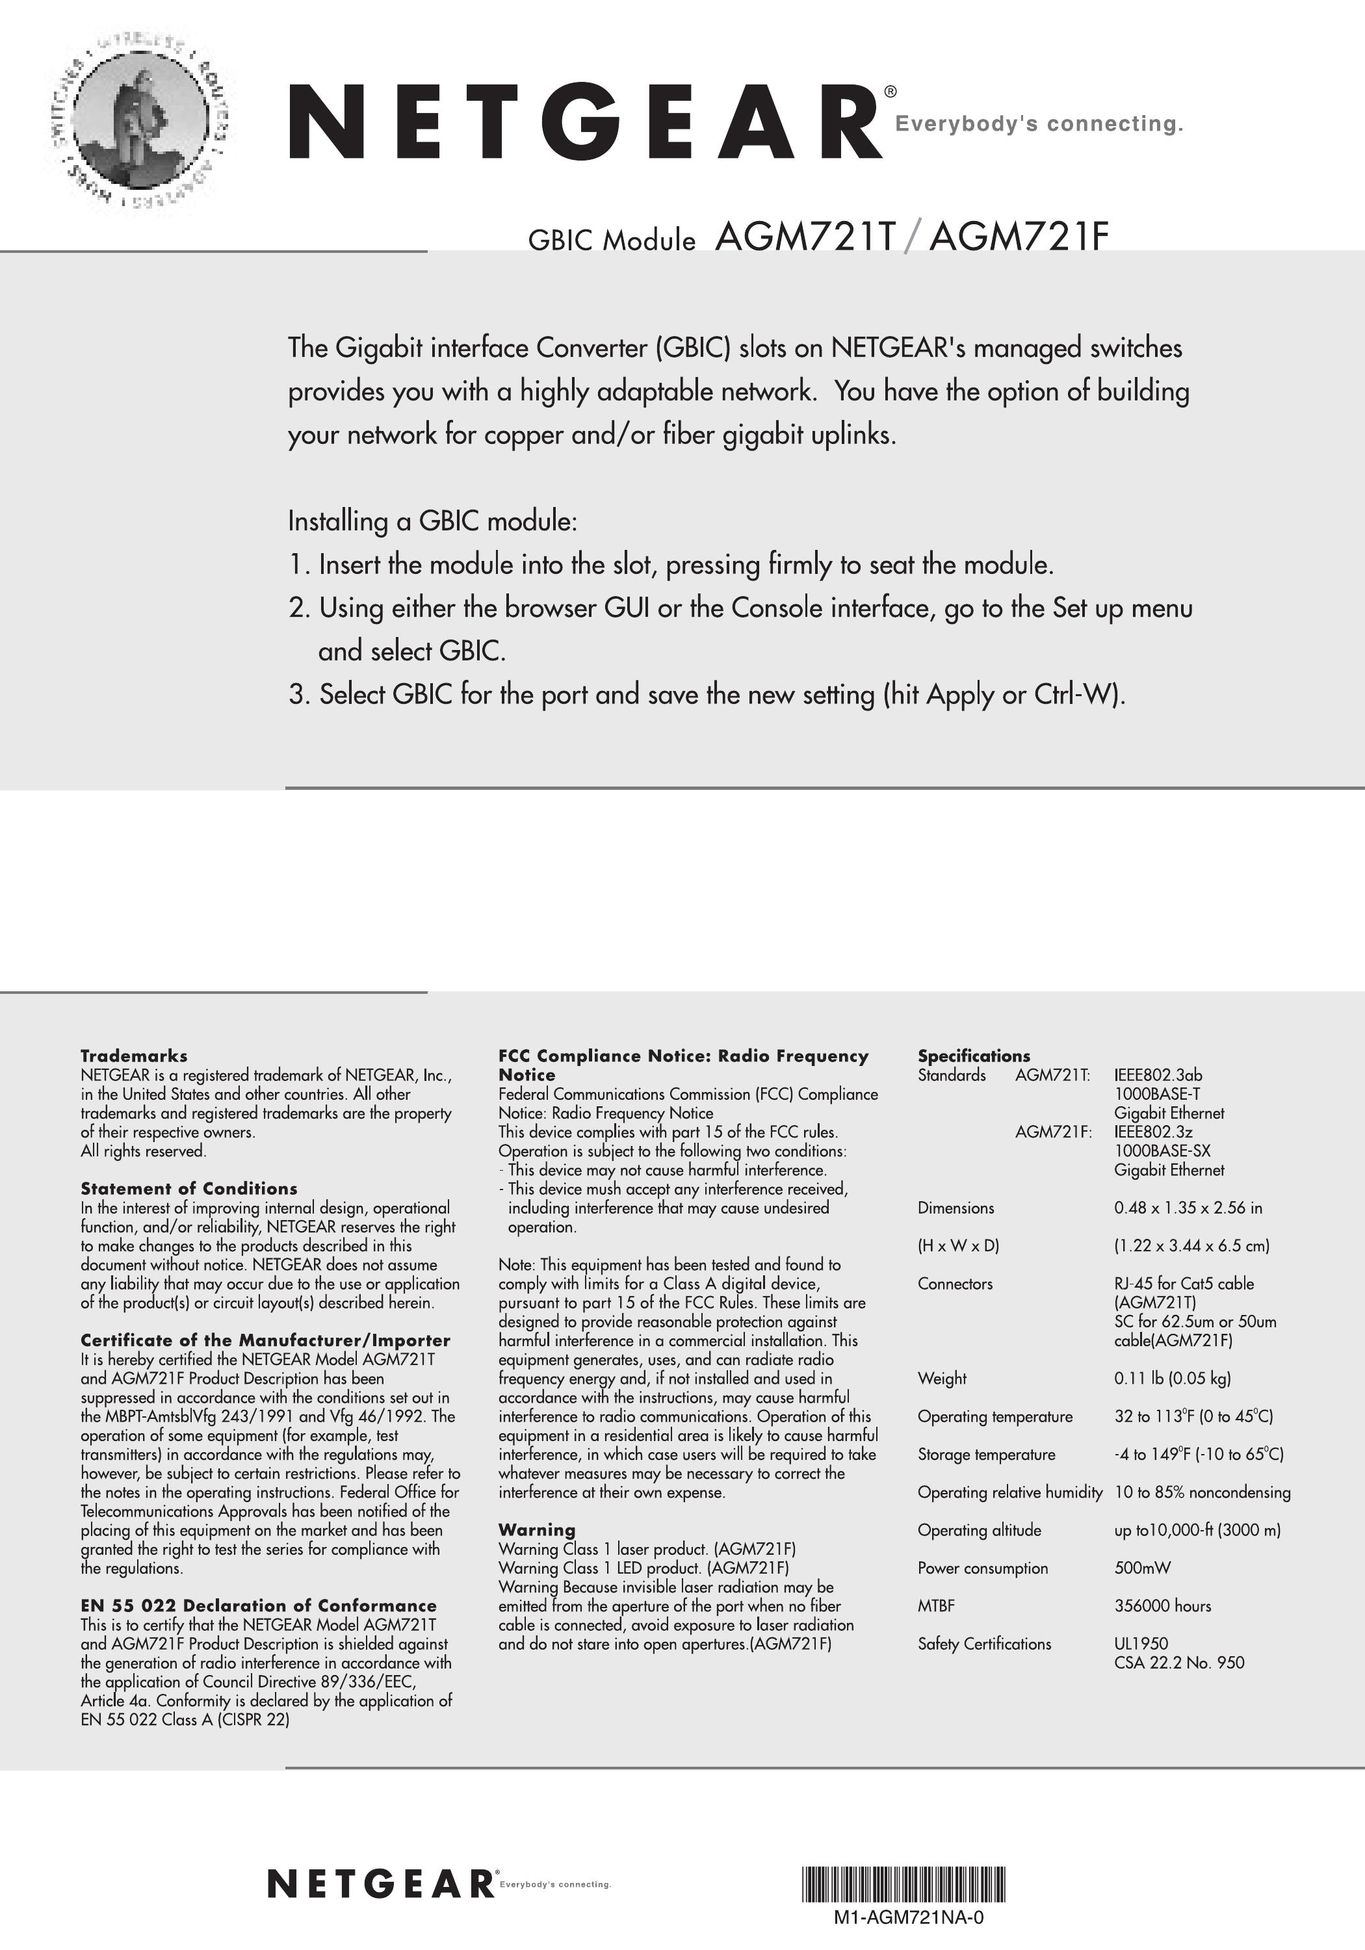 NETGEAR AGM721F Network Card User Manual